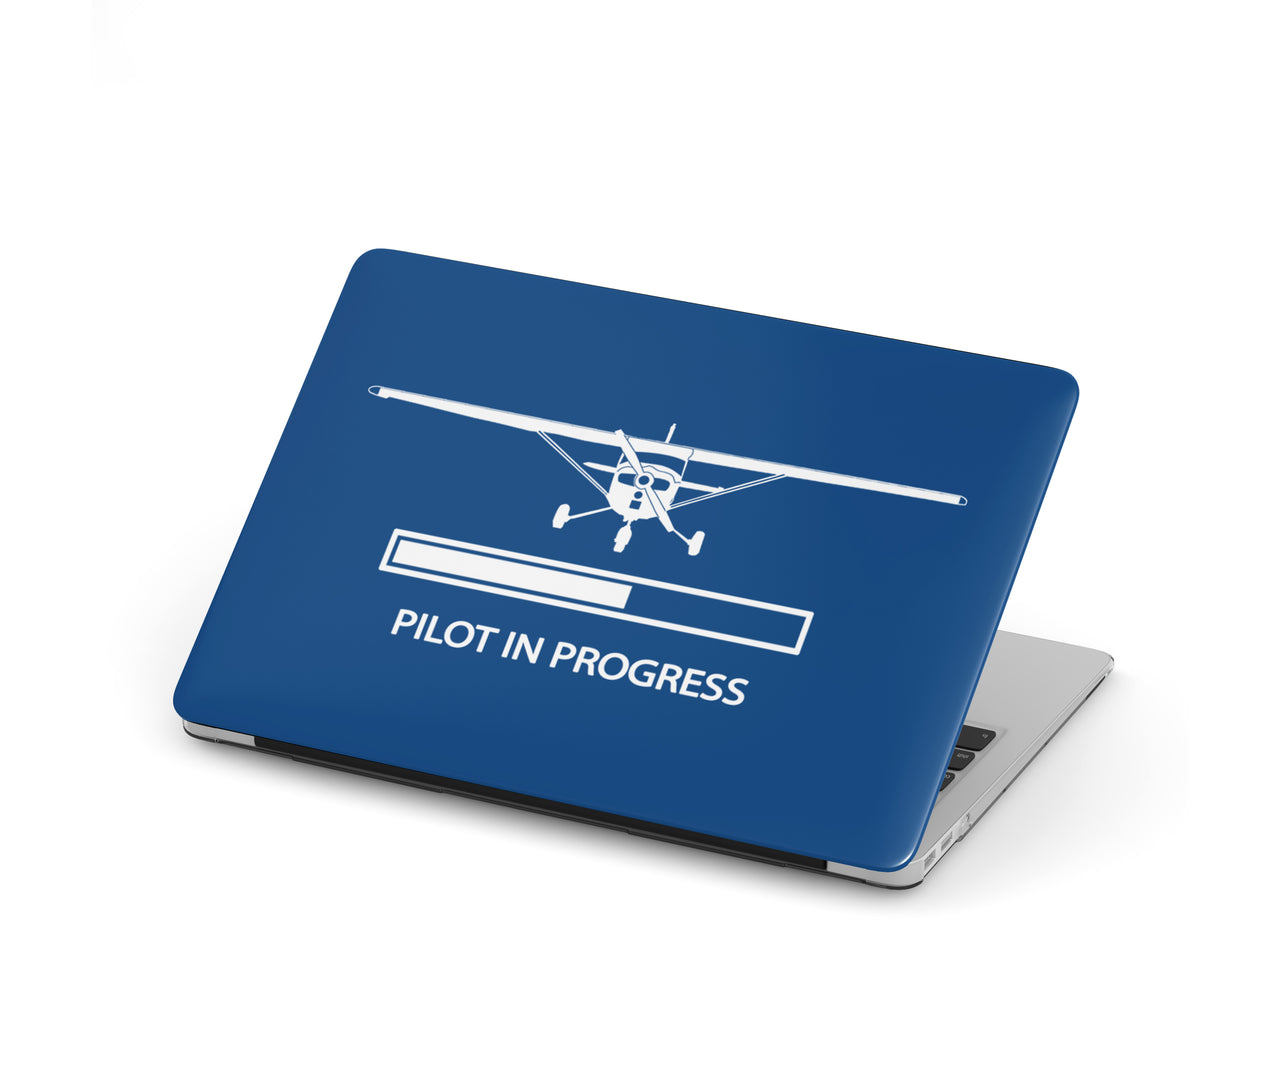 Pilot In Progress (Cessna) Designed Macbook Cases